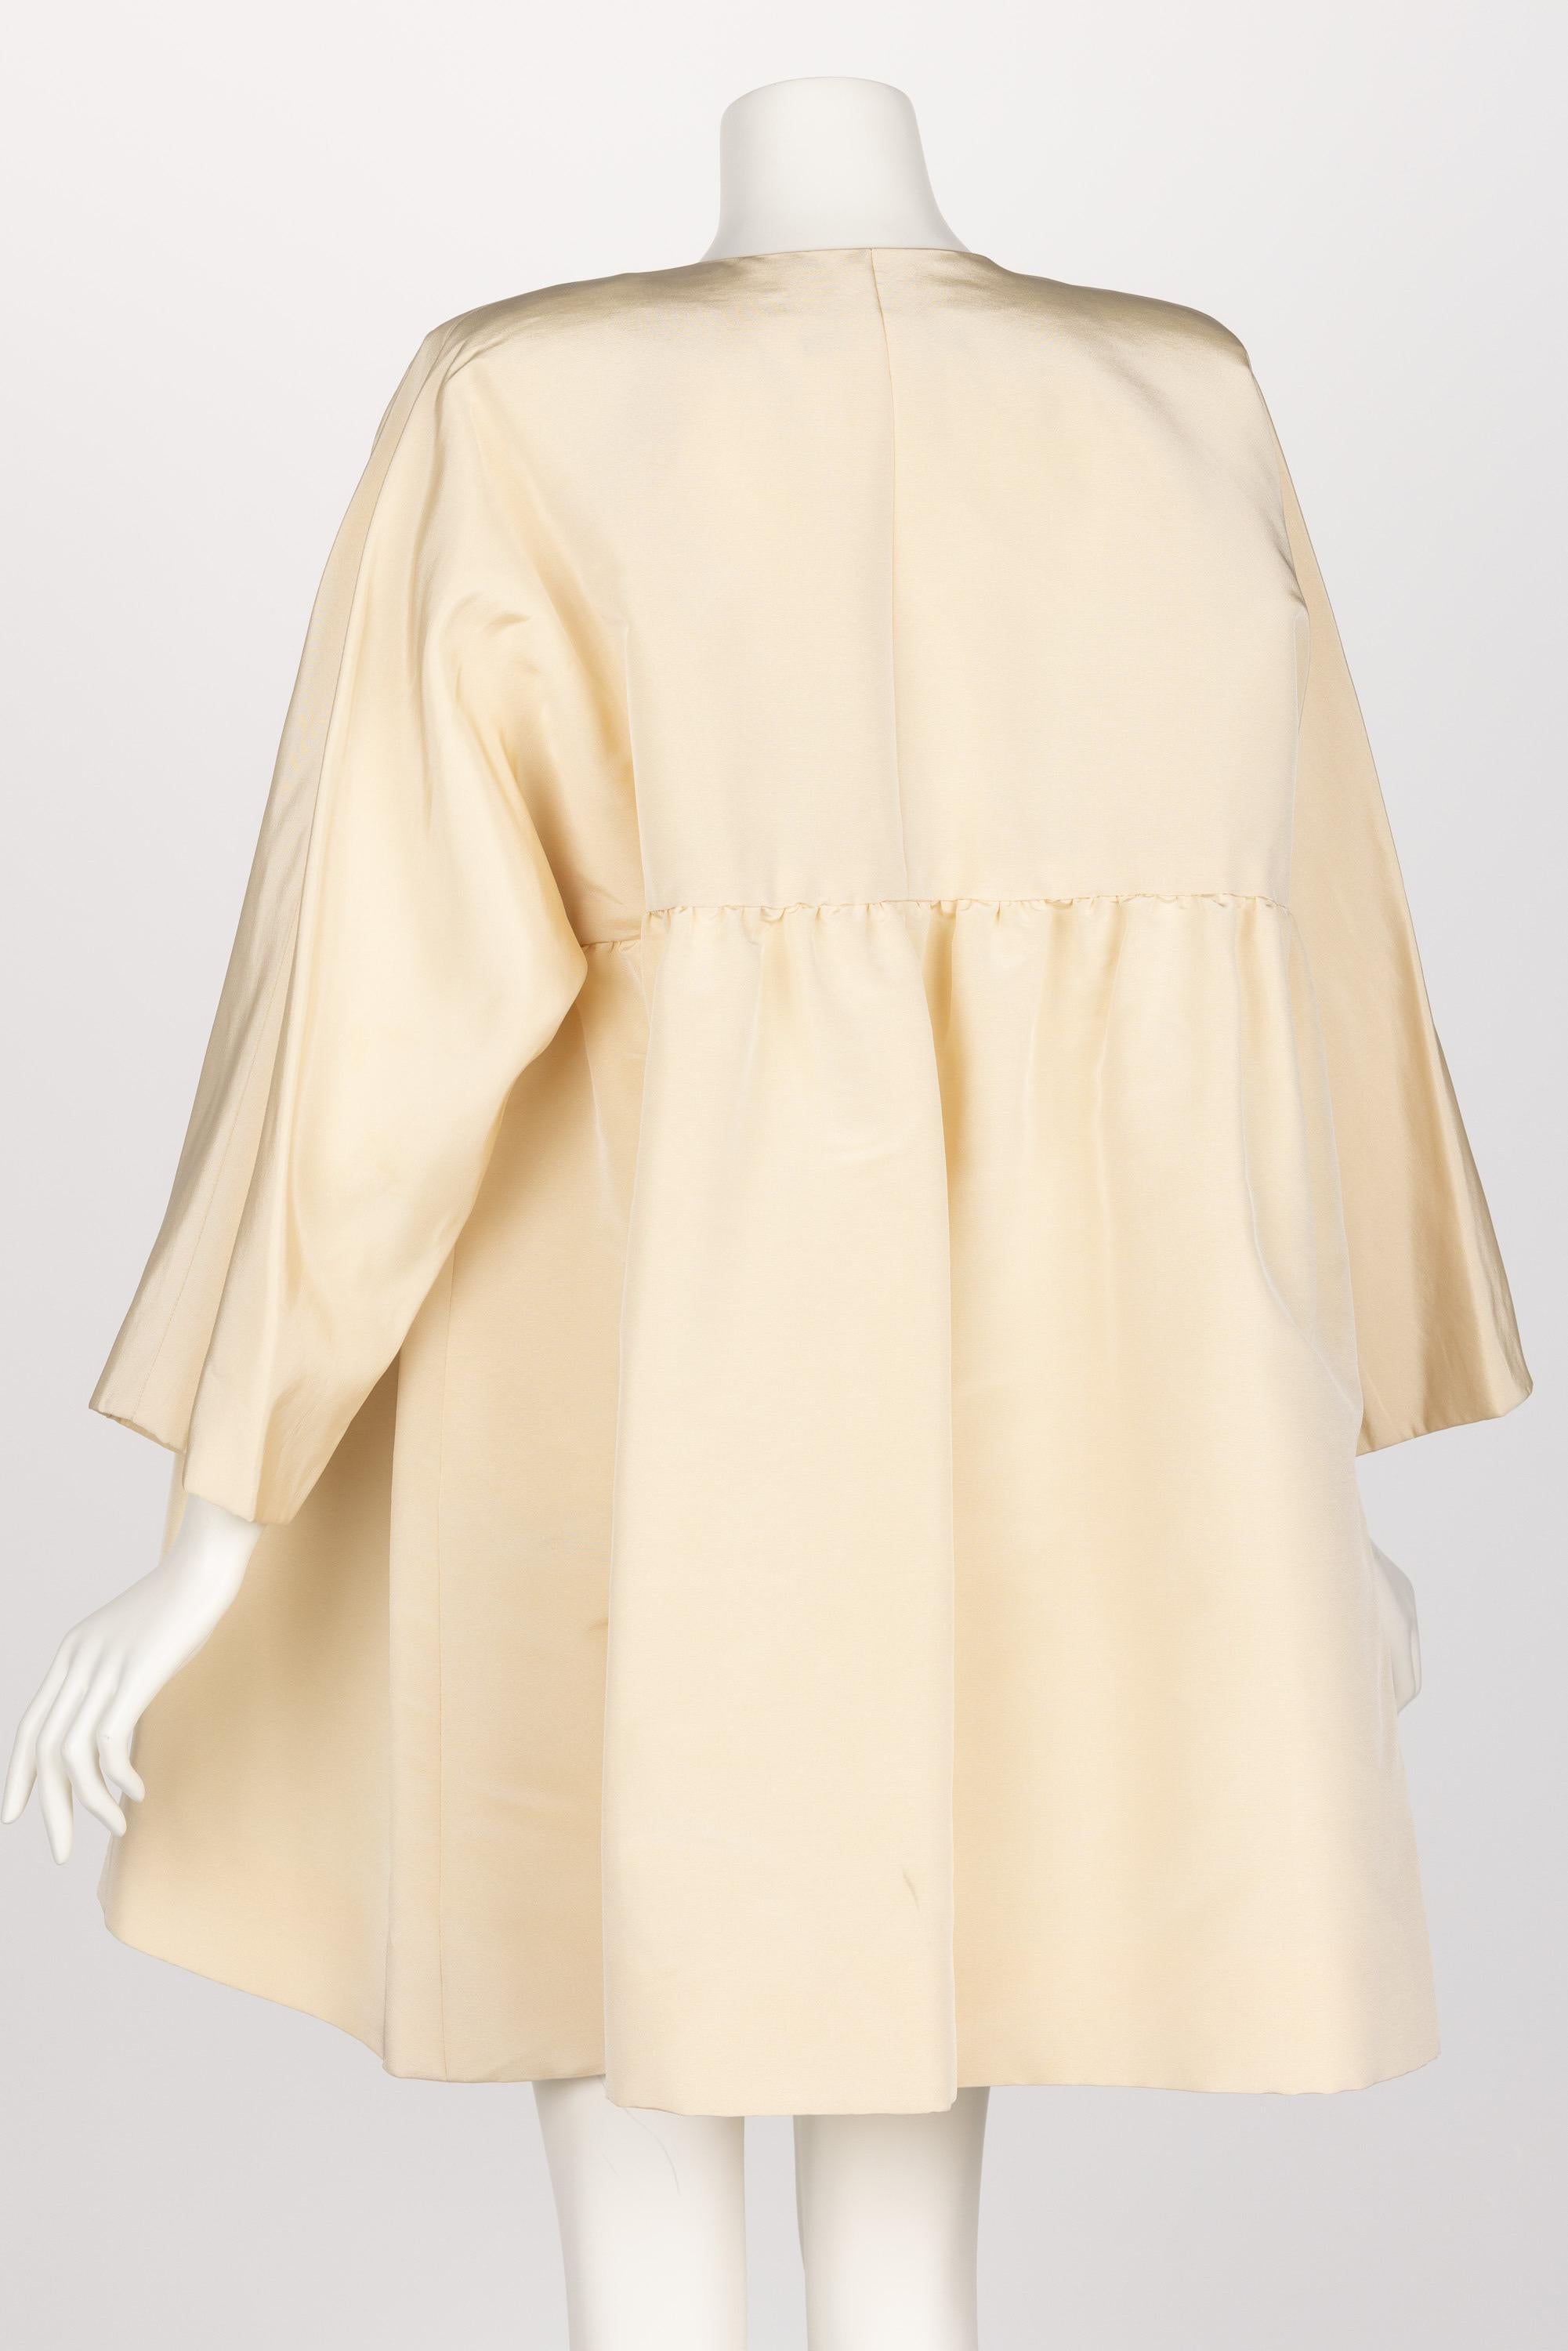 Vintage Givenchy Couture Crème Silk Jacket Coat, 1990s For Sale 1